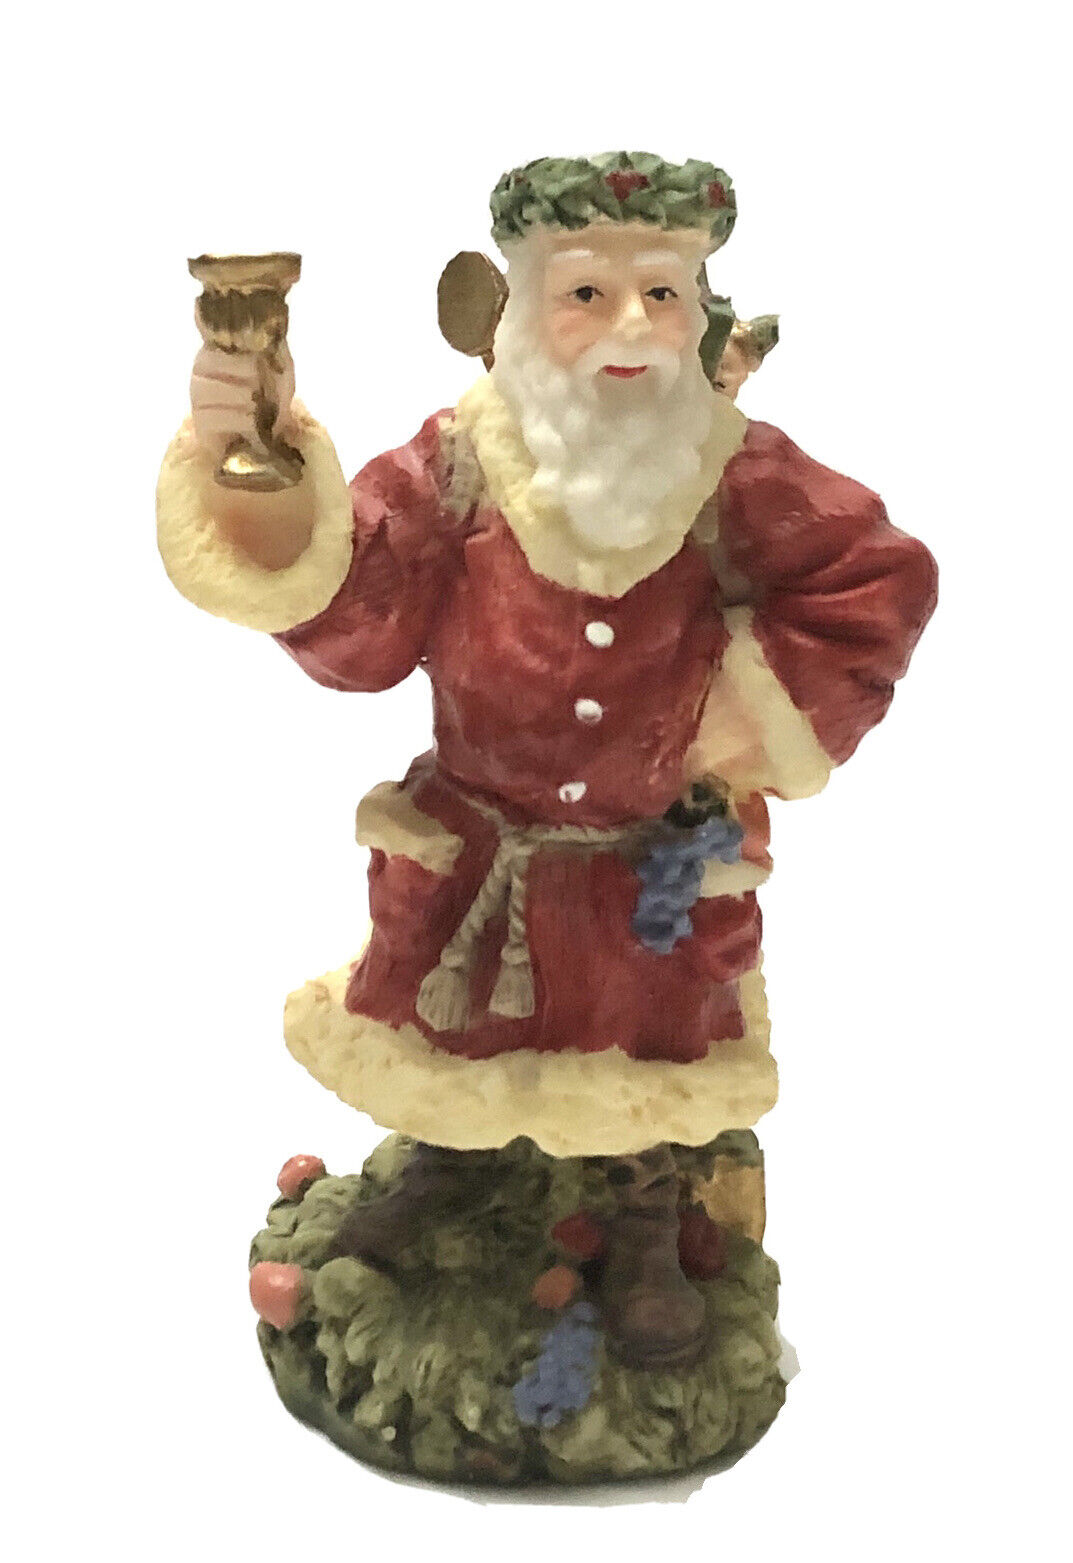 Vintage Father Christmas Figurine The International Santa collectible